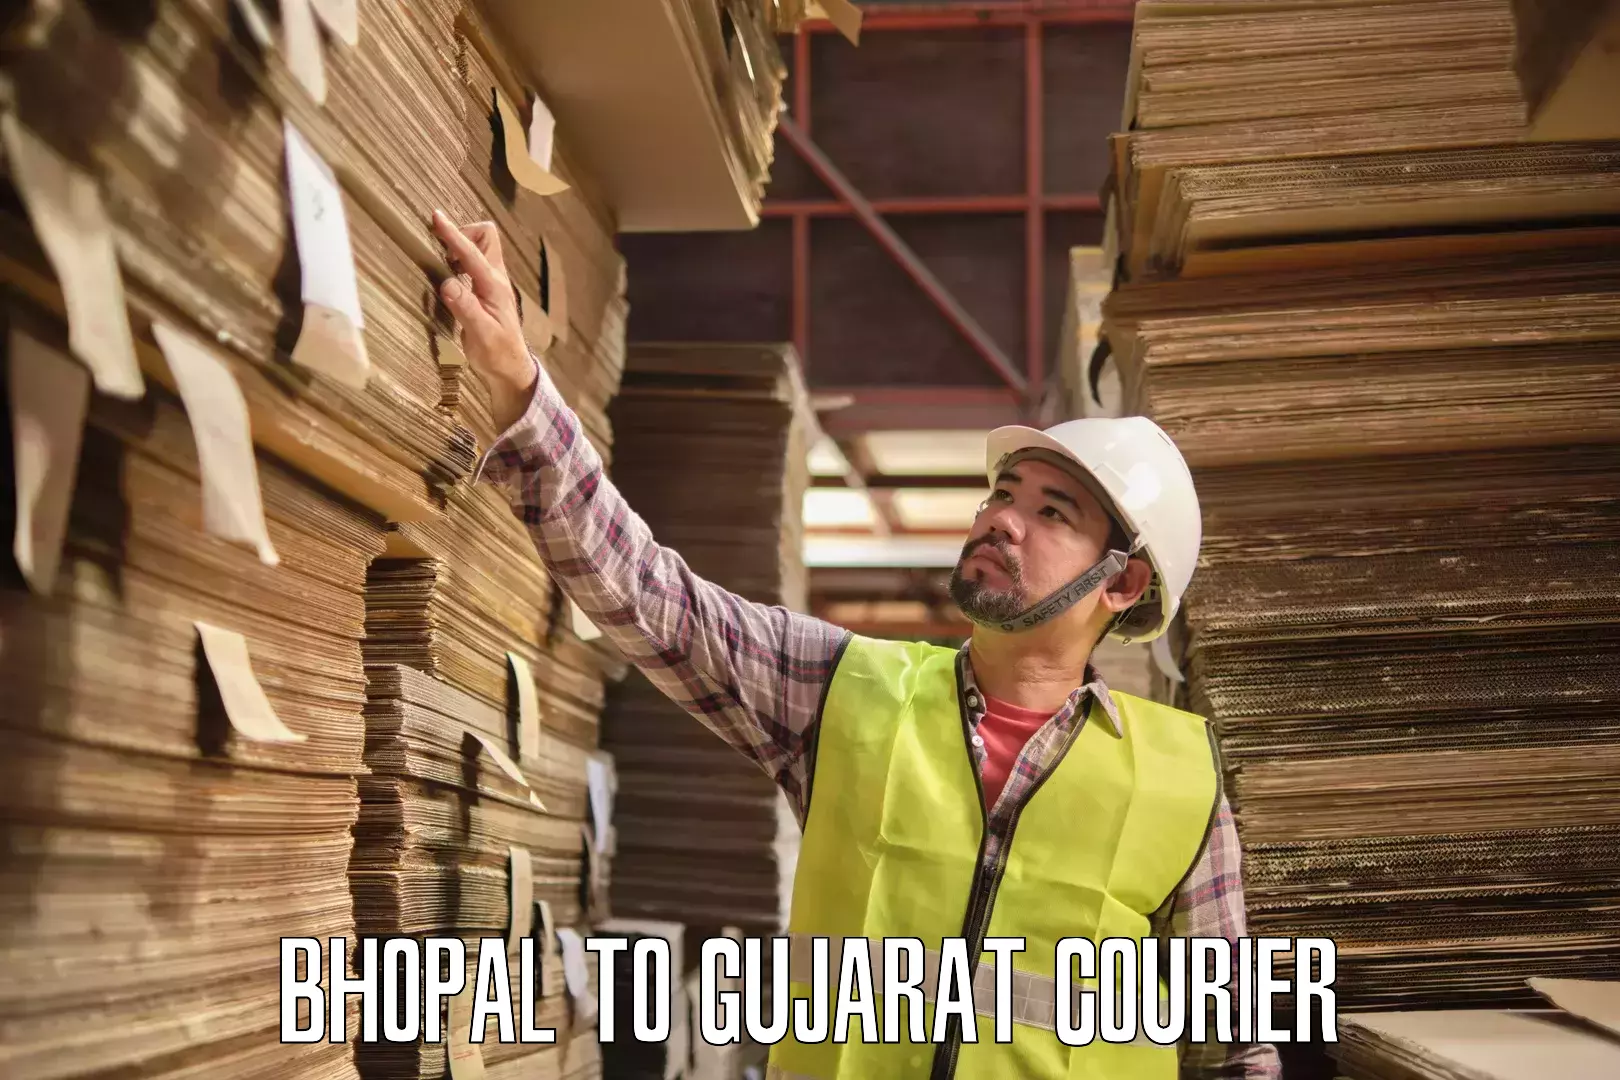 Global logistics network Bhopal to Madhavpur